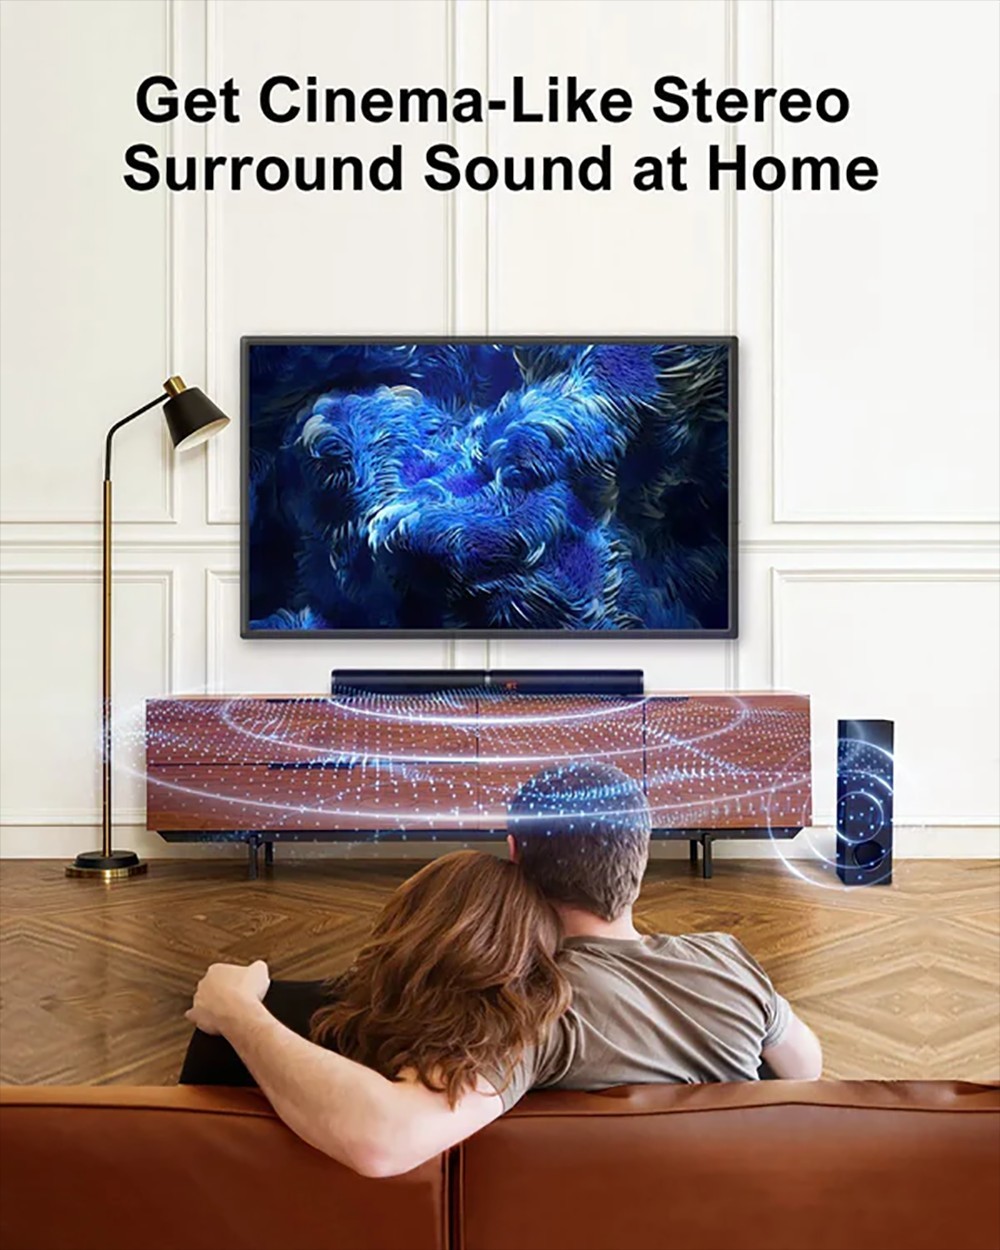 Ultimea Tapio VII 2.1 Wired Soundbar for TV Devices, 190 W 2.1 Soundbar with Subwoofer, 6 EQ Modes - Black